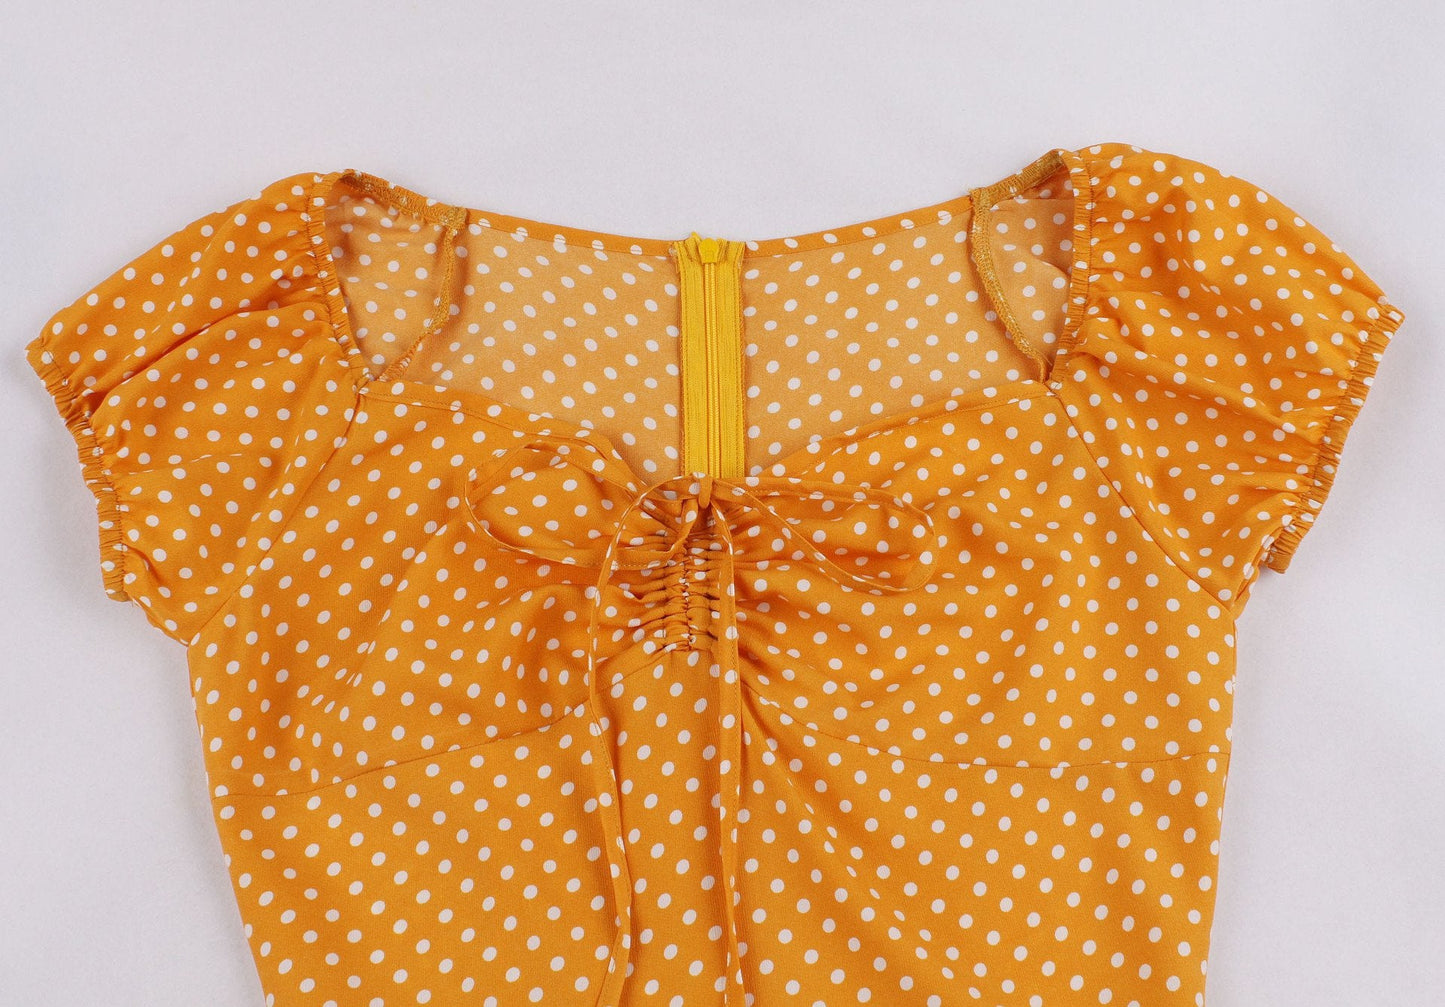 Women Short Sleeves Dot Print Vintage Dresses-Vintage Dresses-Pink-S-Free Shipping Leatheretro